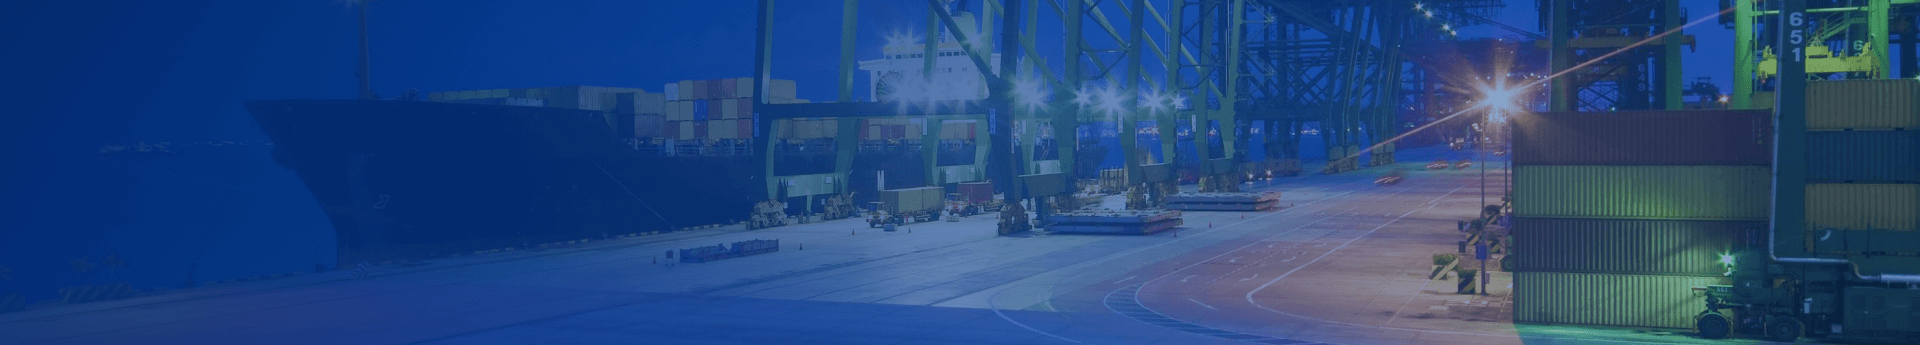 Illustrative photo of a port